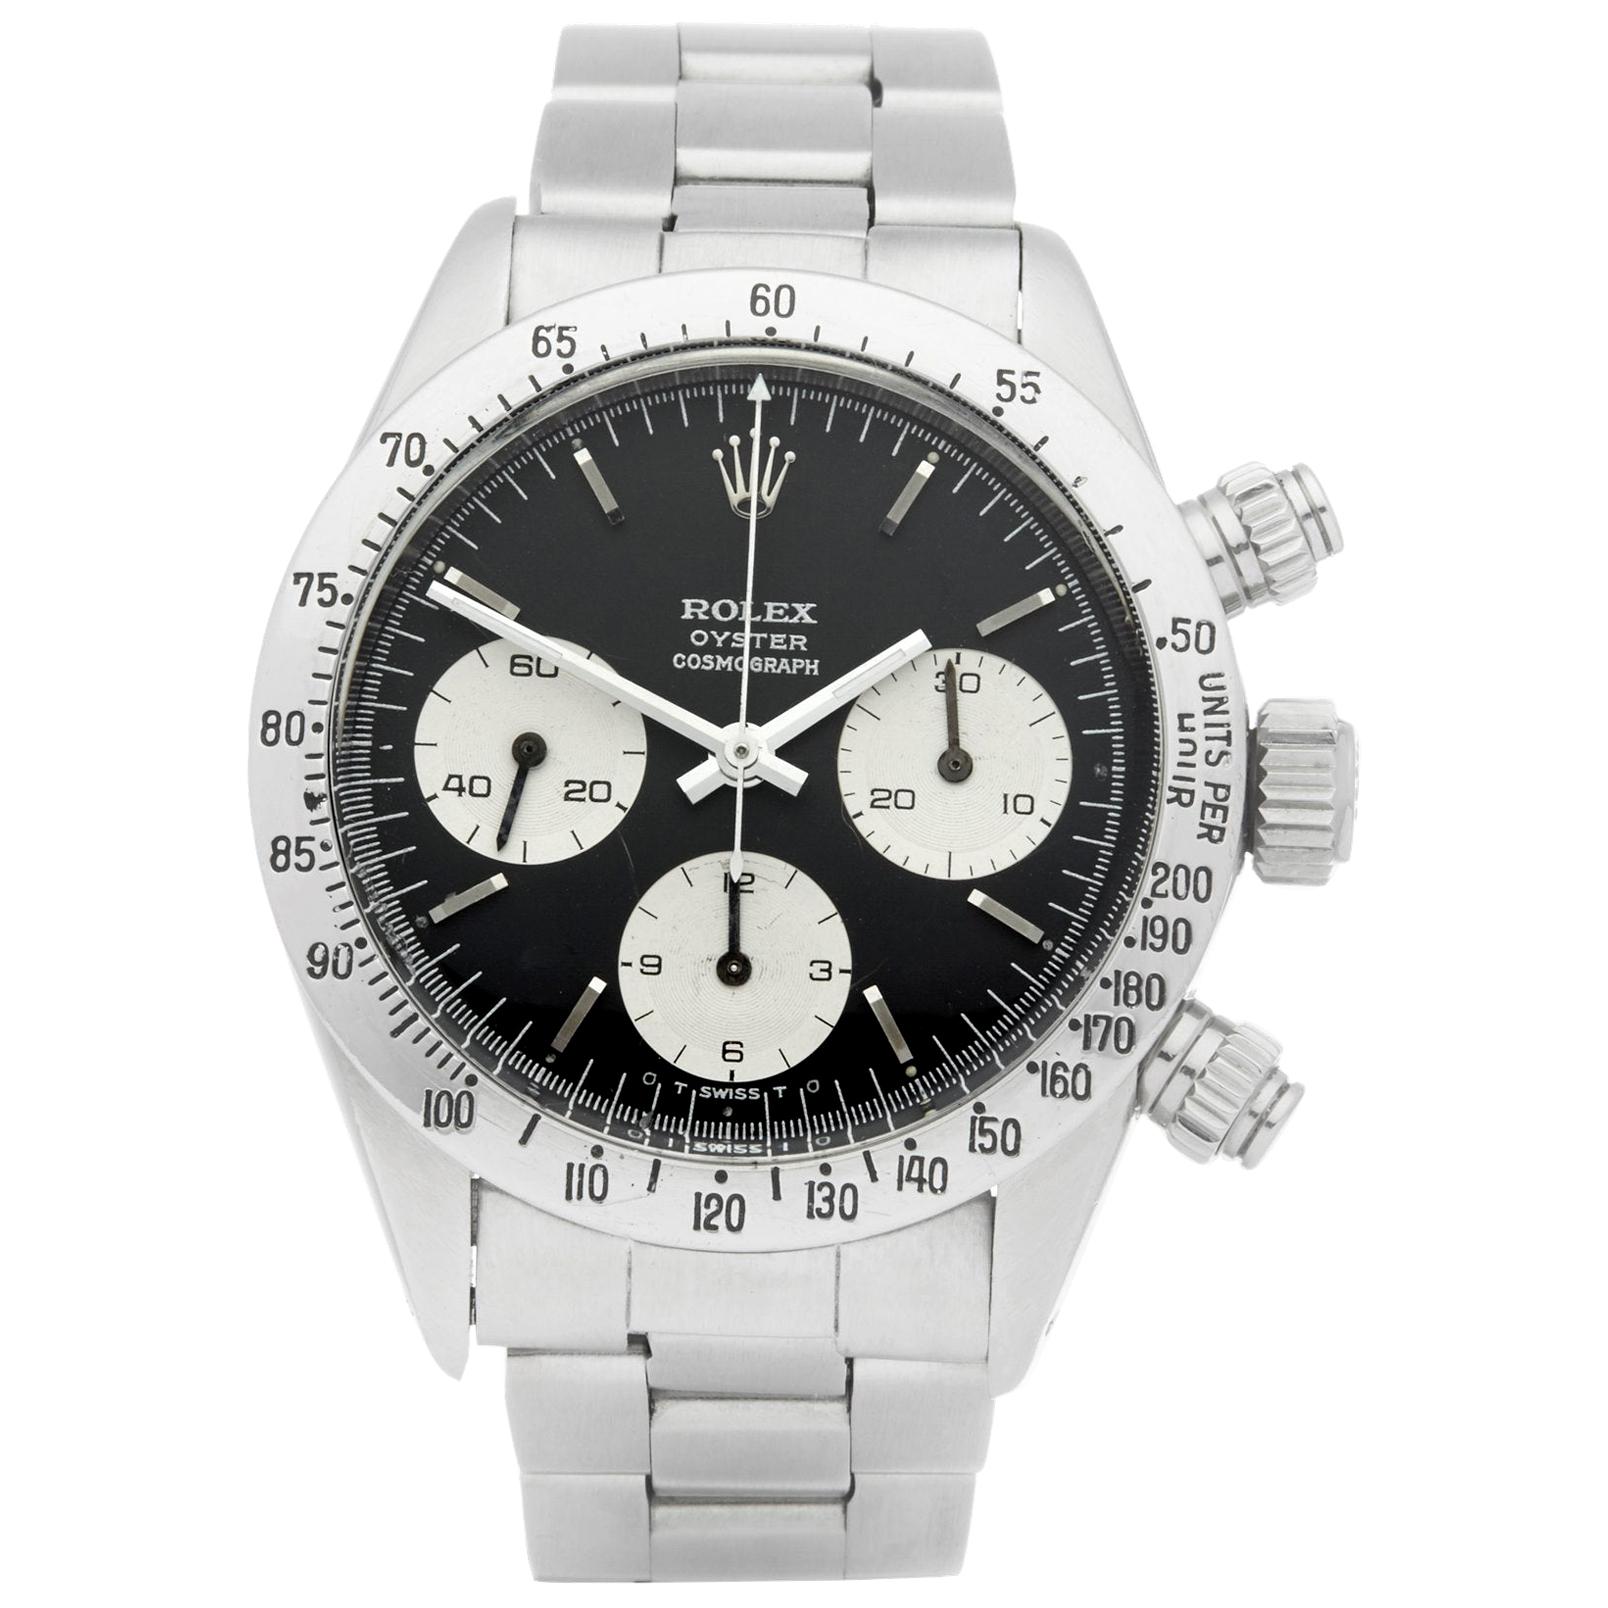 Rolex Daytona 6265 Men's Stainless Steel Chronograph Watch